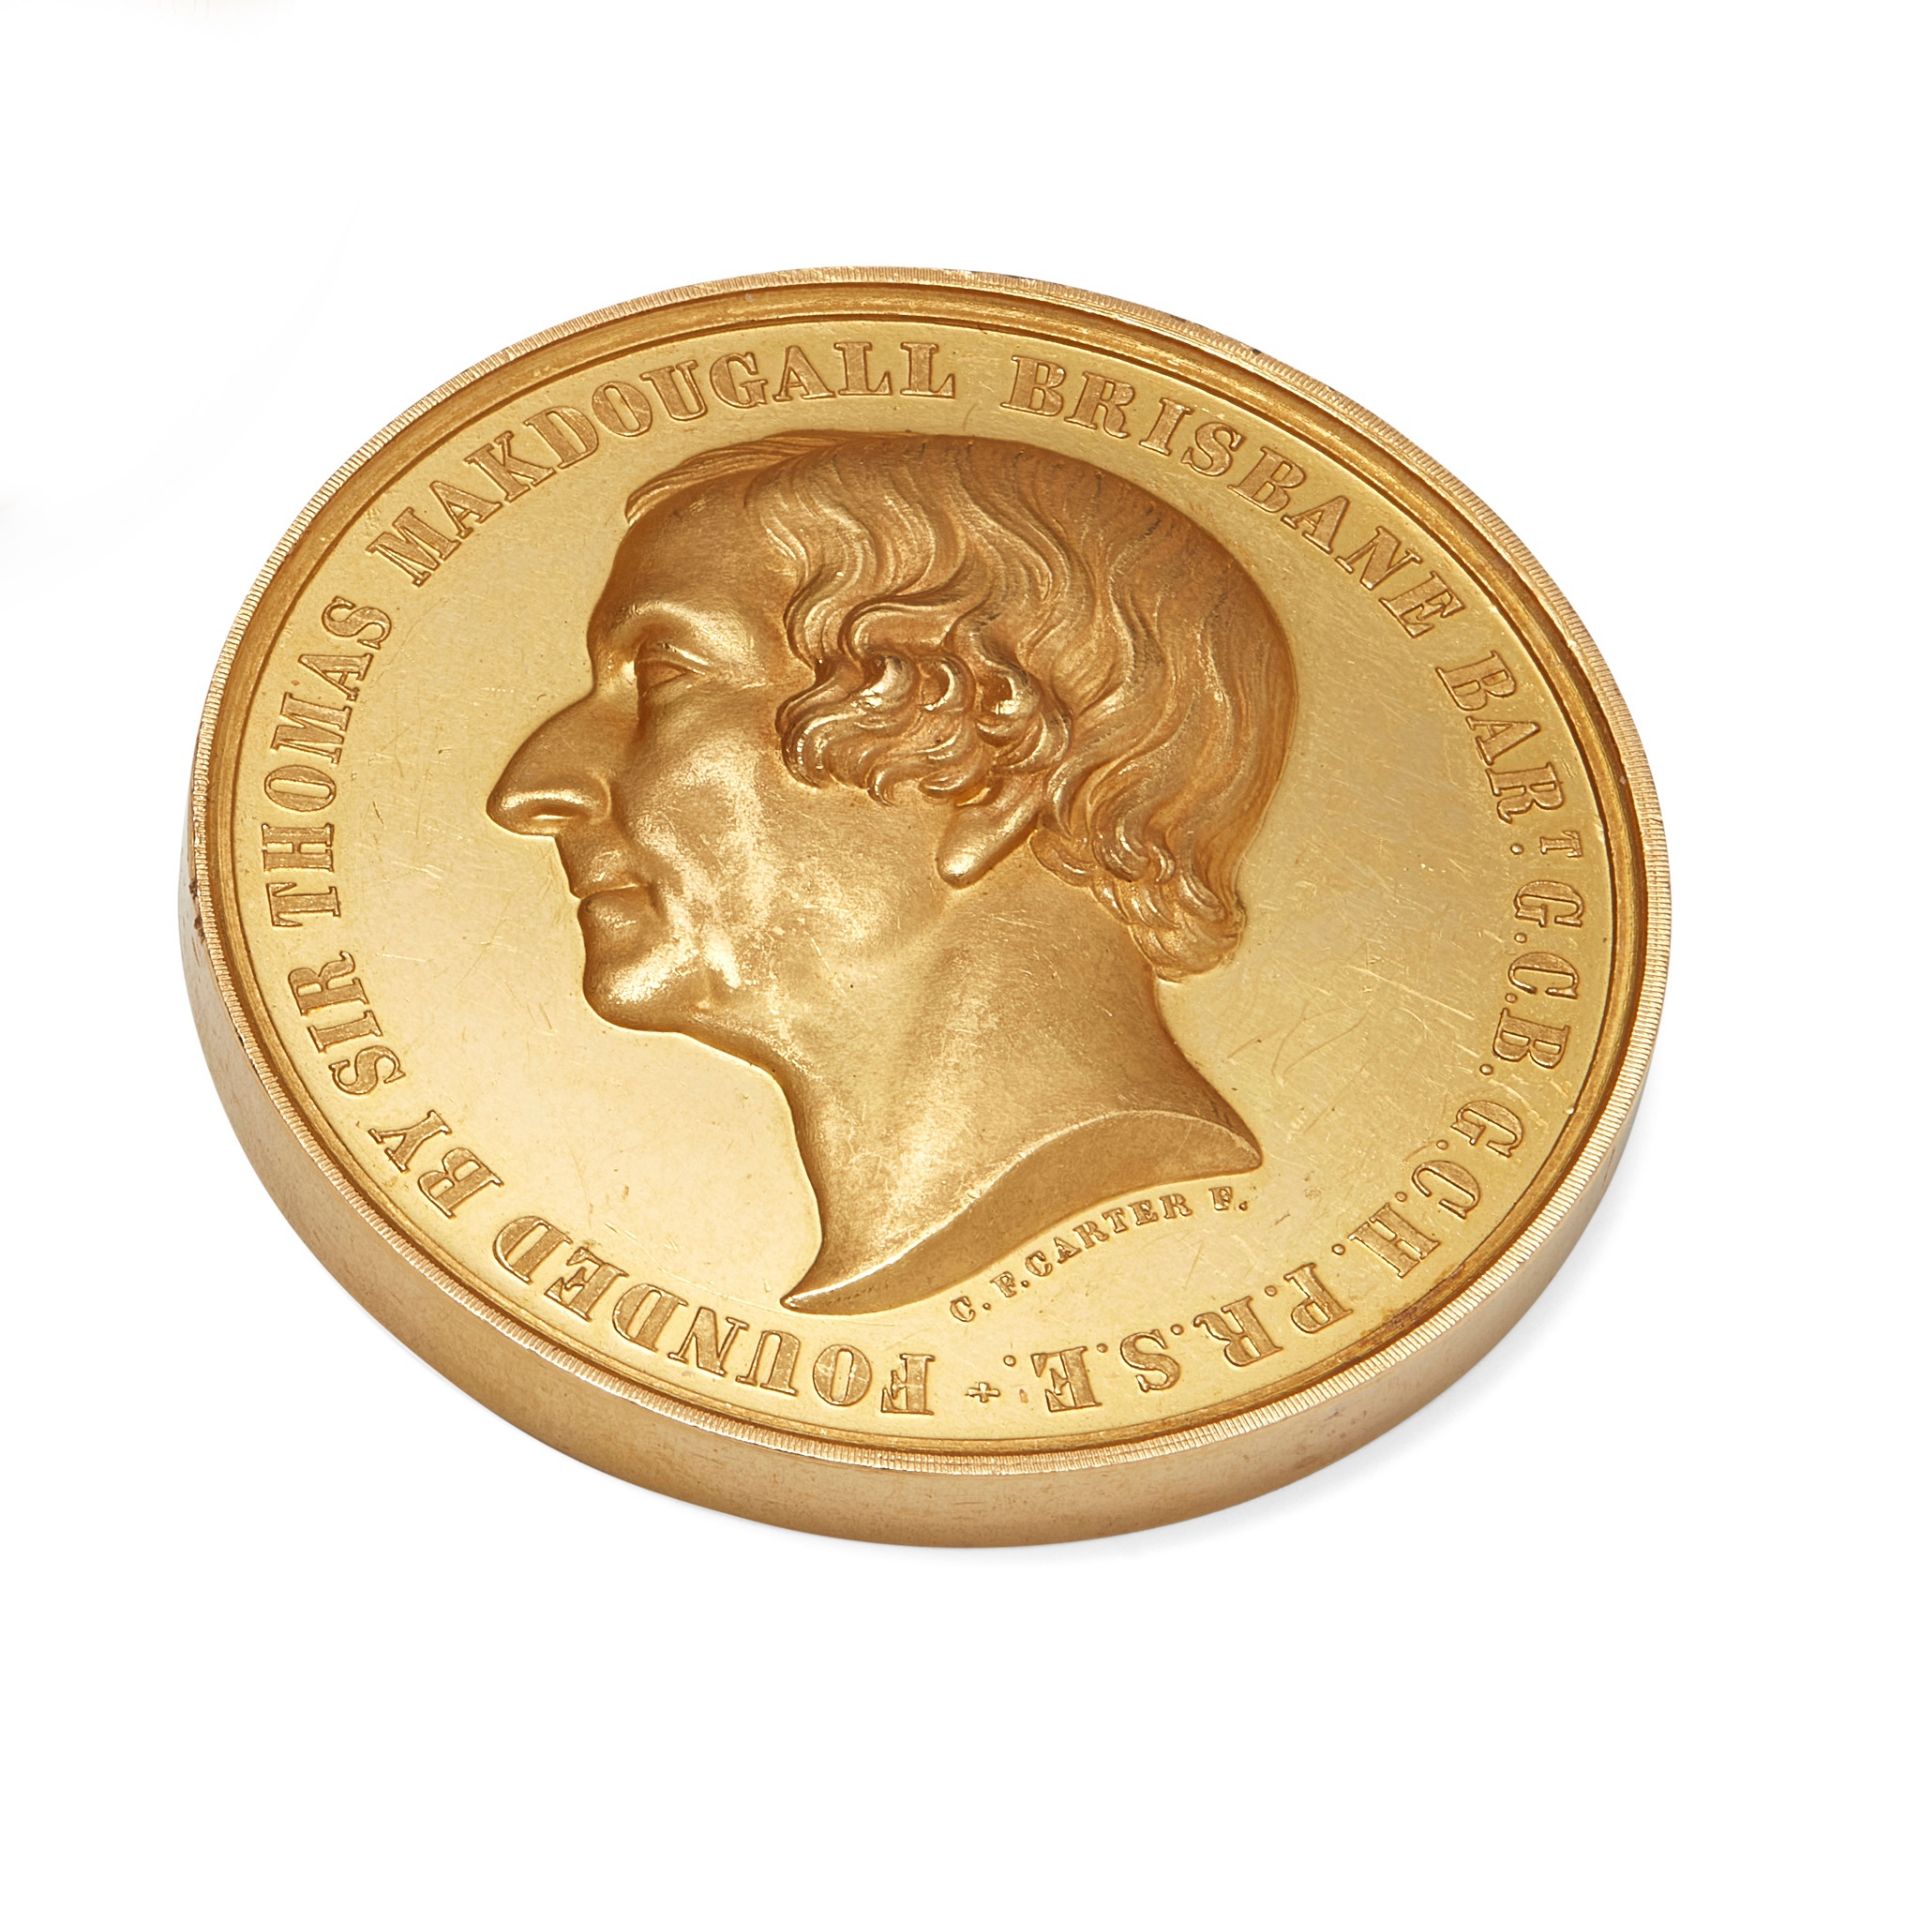 The Makdougall Brisbane Prize Royal Society of Edinburgh Medal awarded to Edward Sang